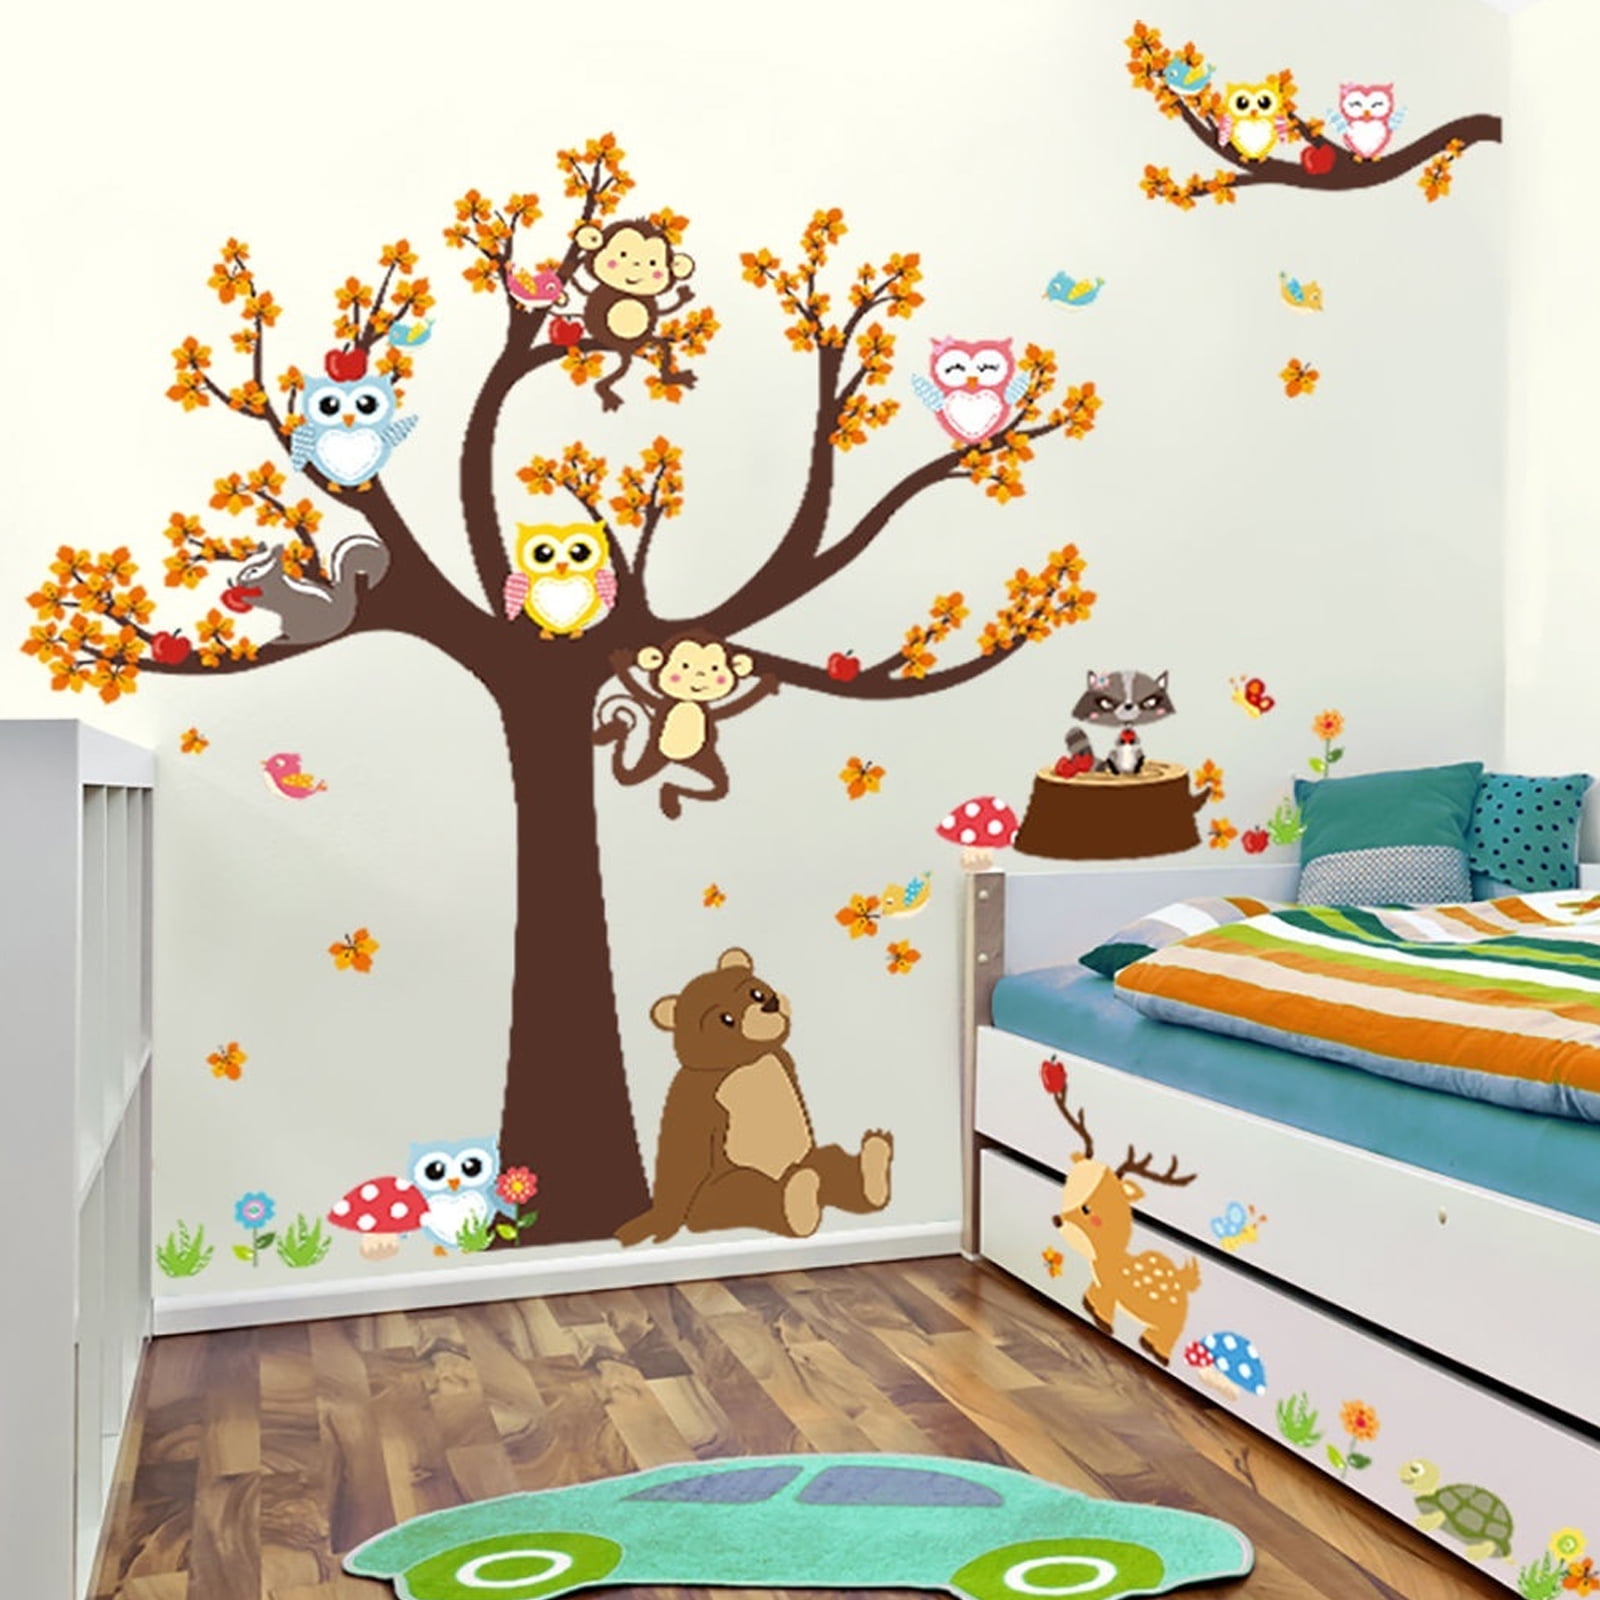 Monkey Animal Wall Stickers Jungle Zoo Tree Nursery Baby Kids Room DIY Decal Art